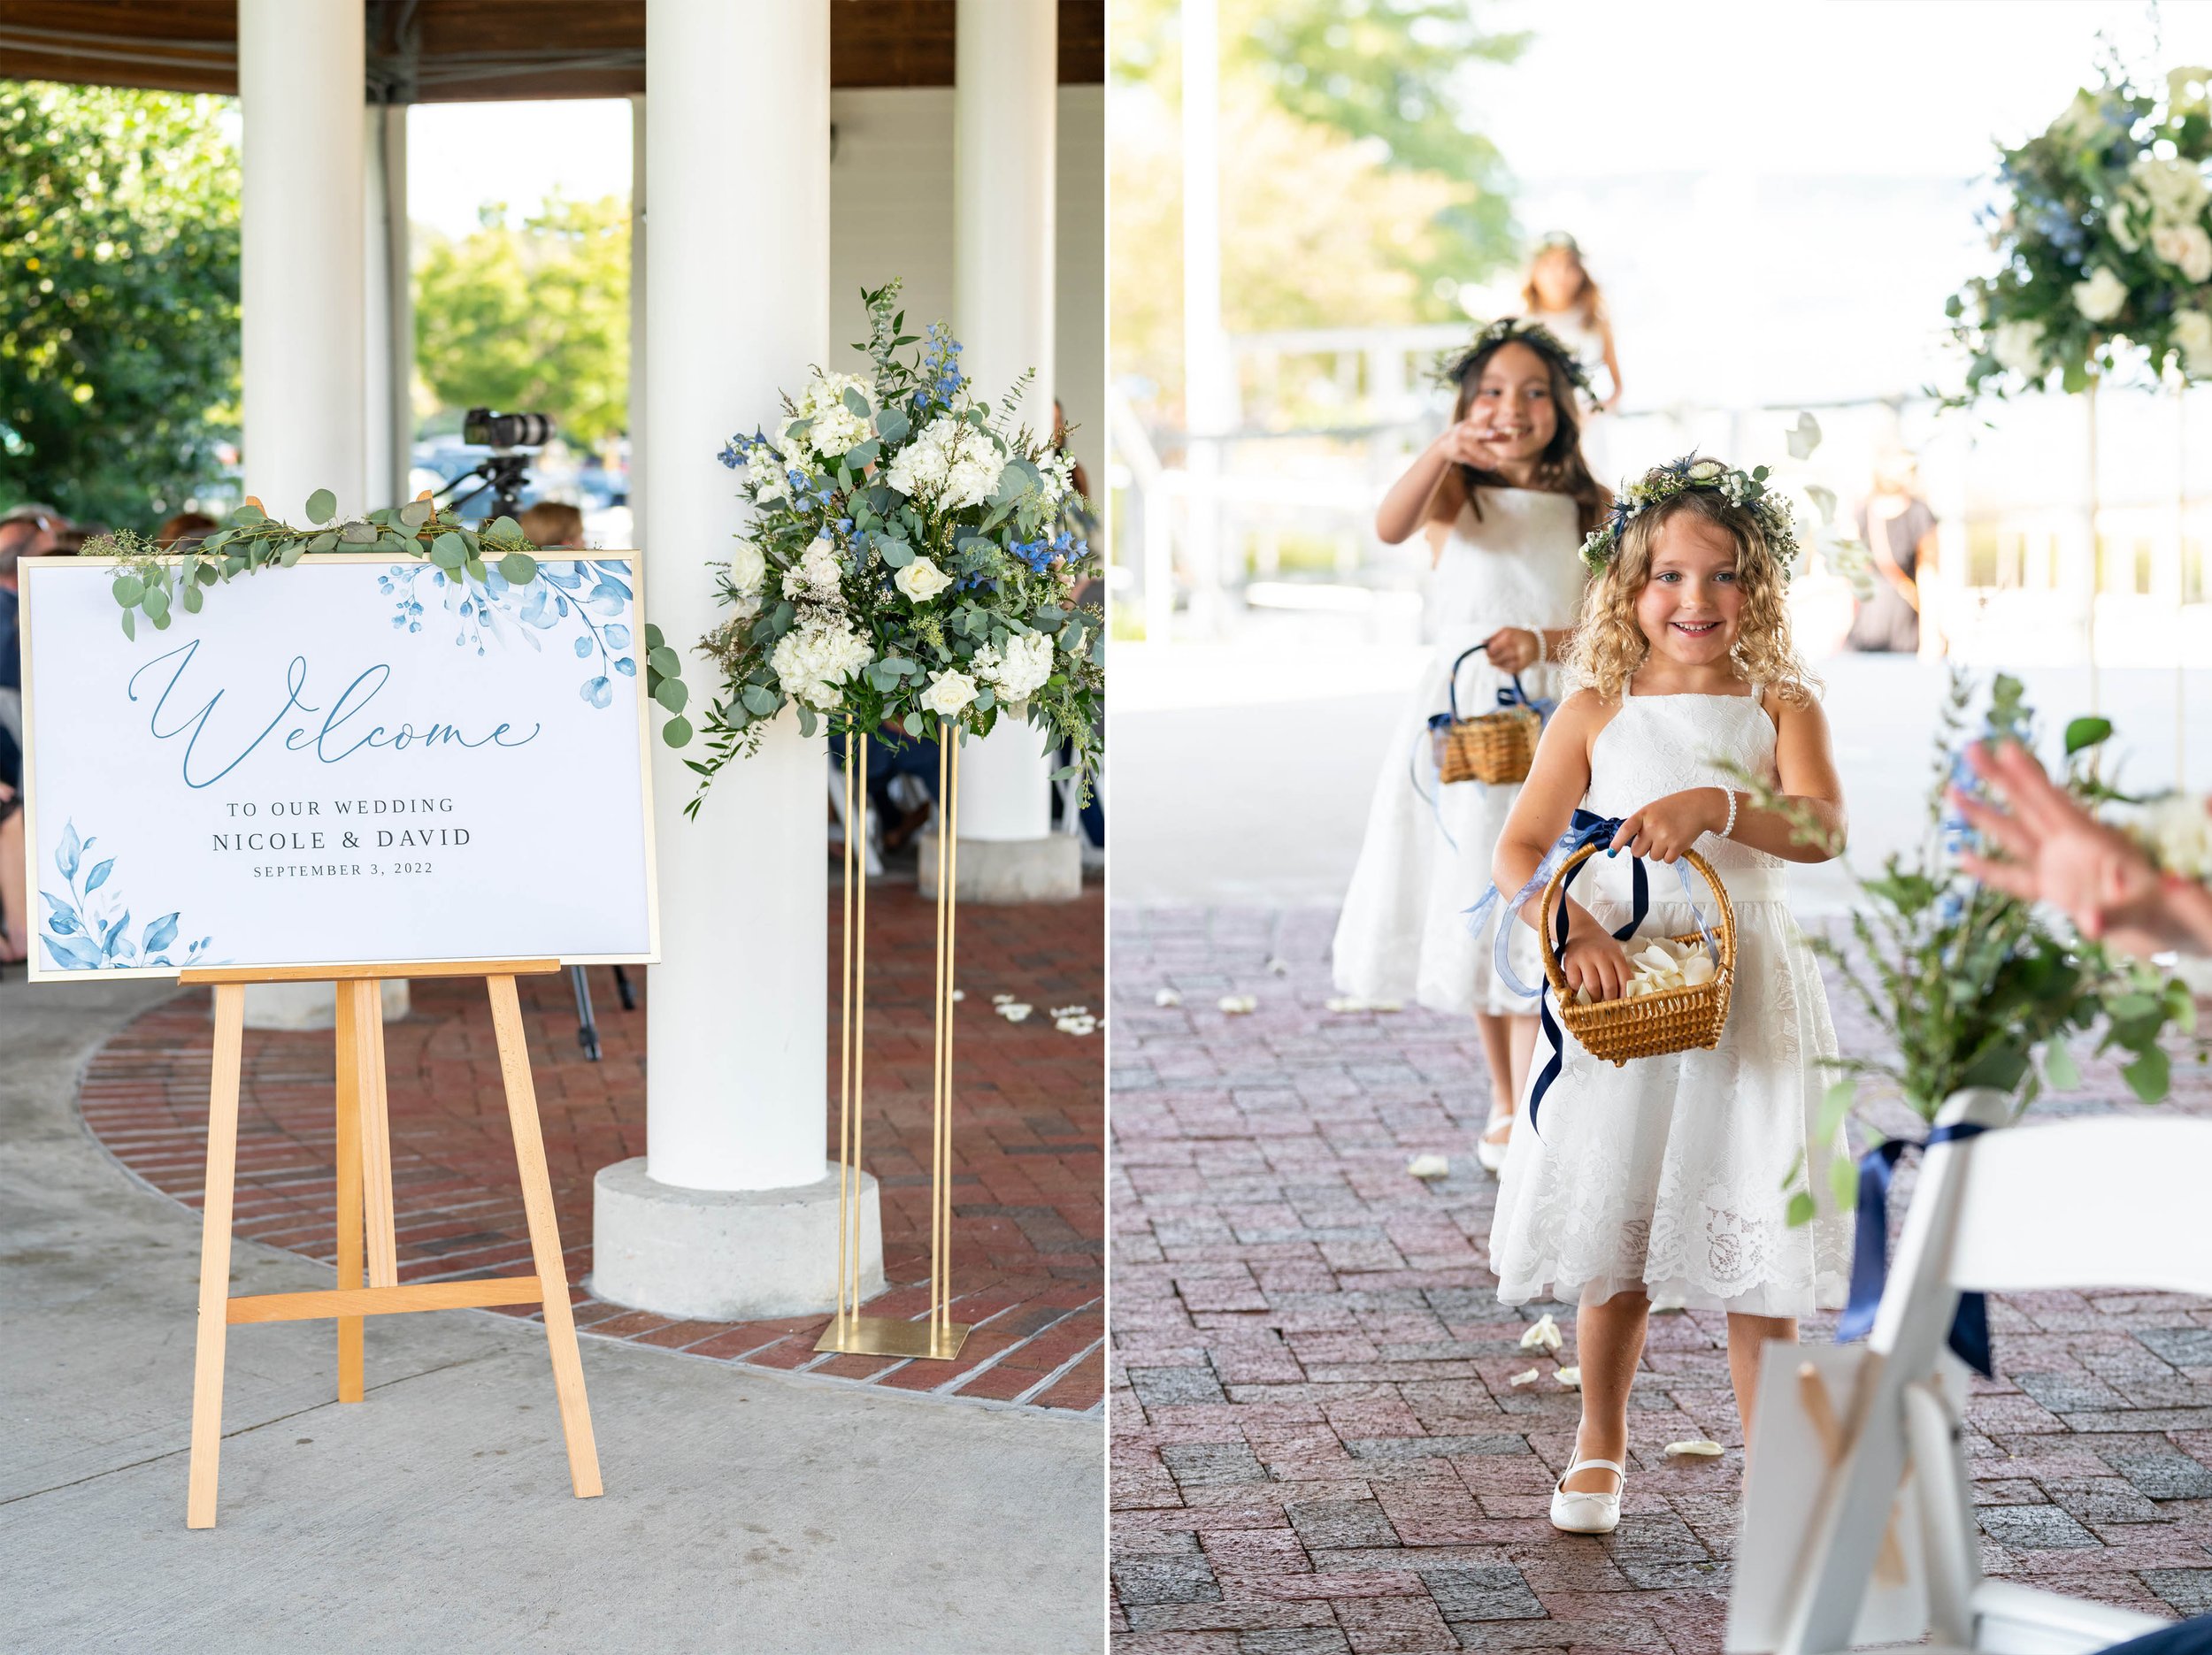 Hyatt Regency Chesapeake wedding photos and ceremony pavilion with sign